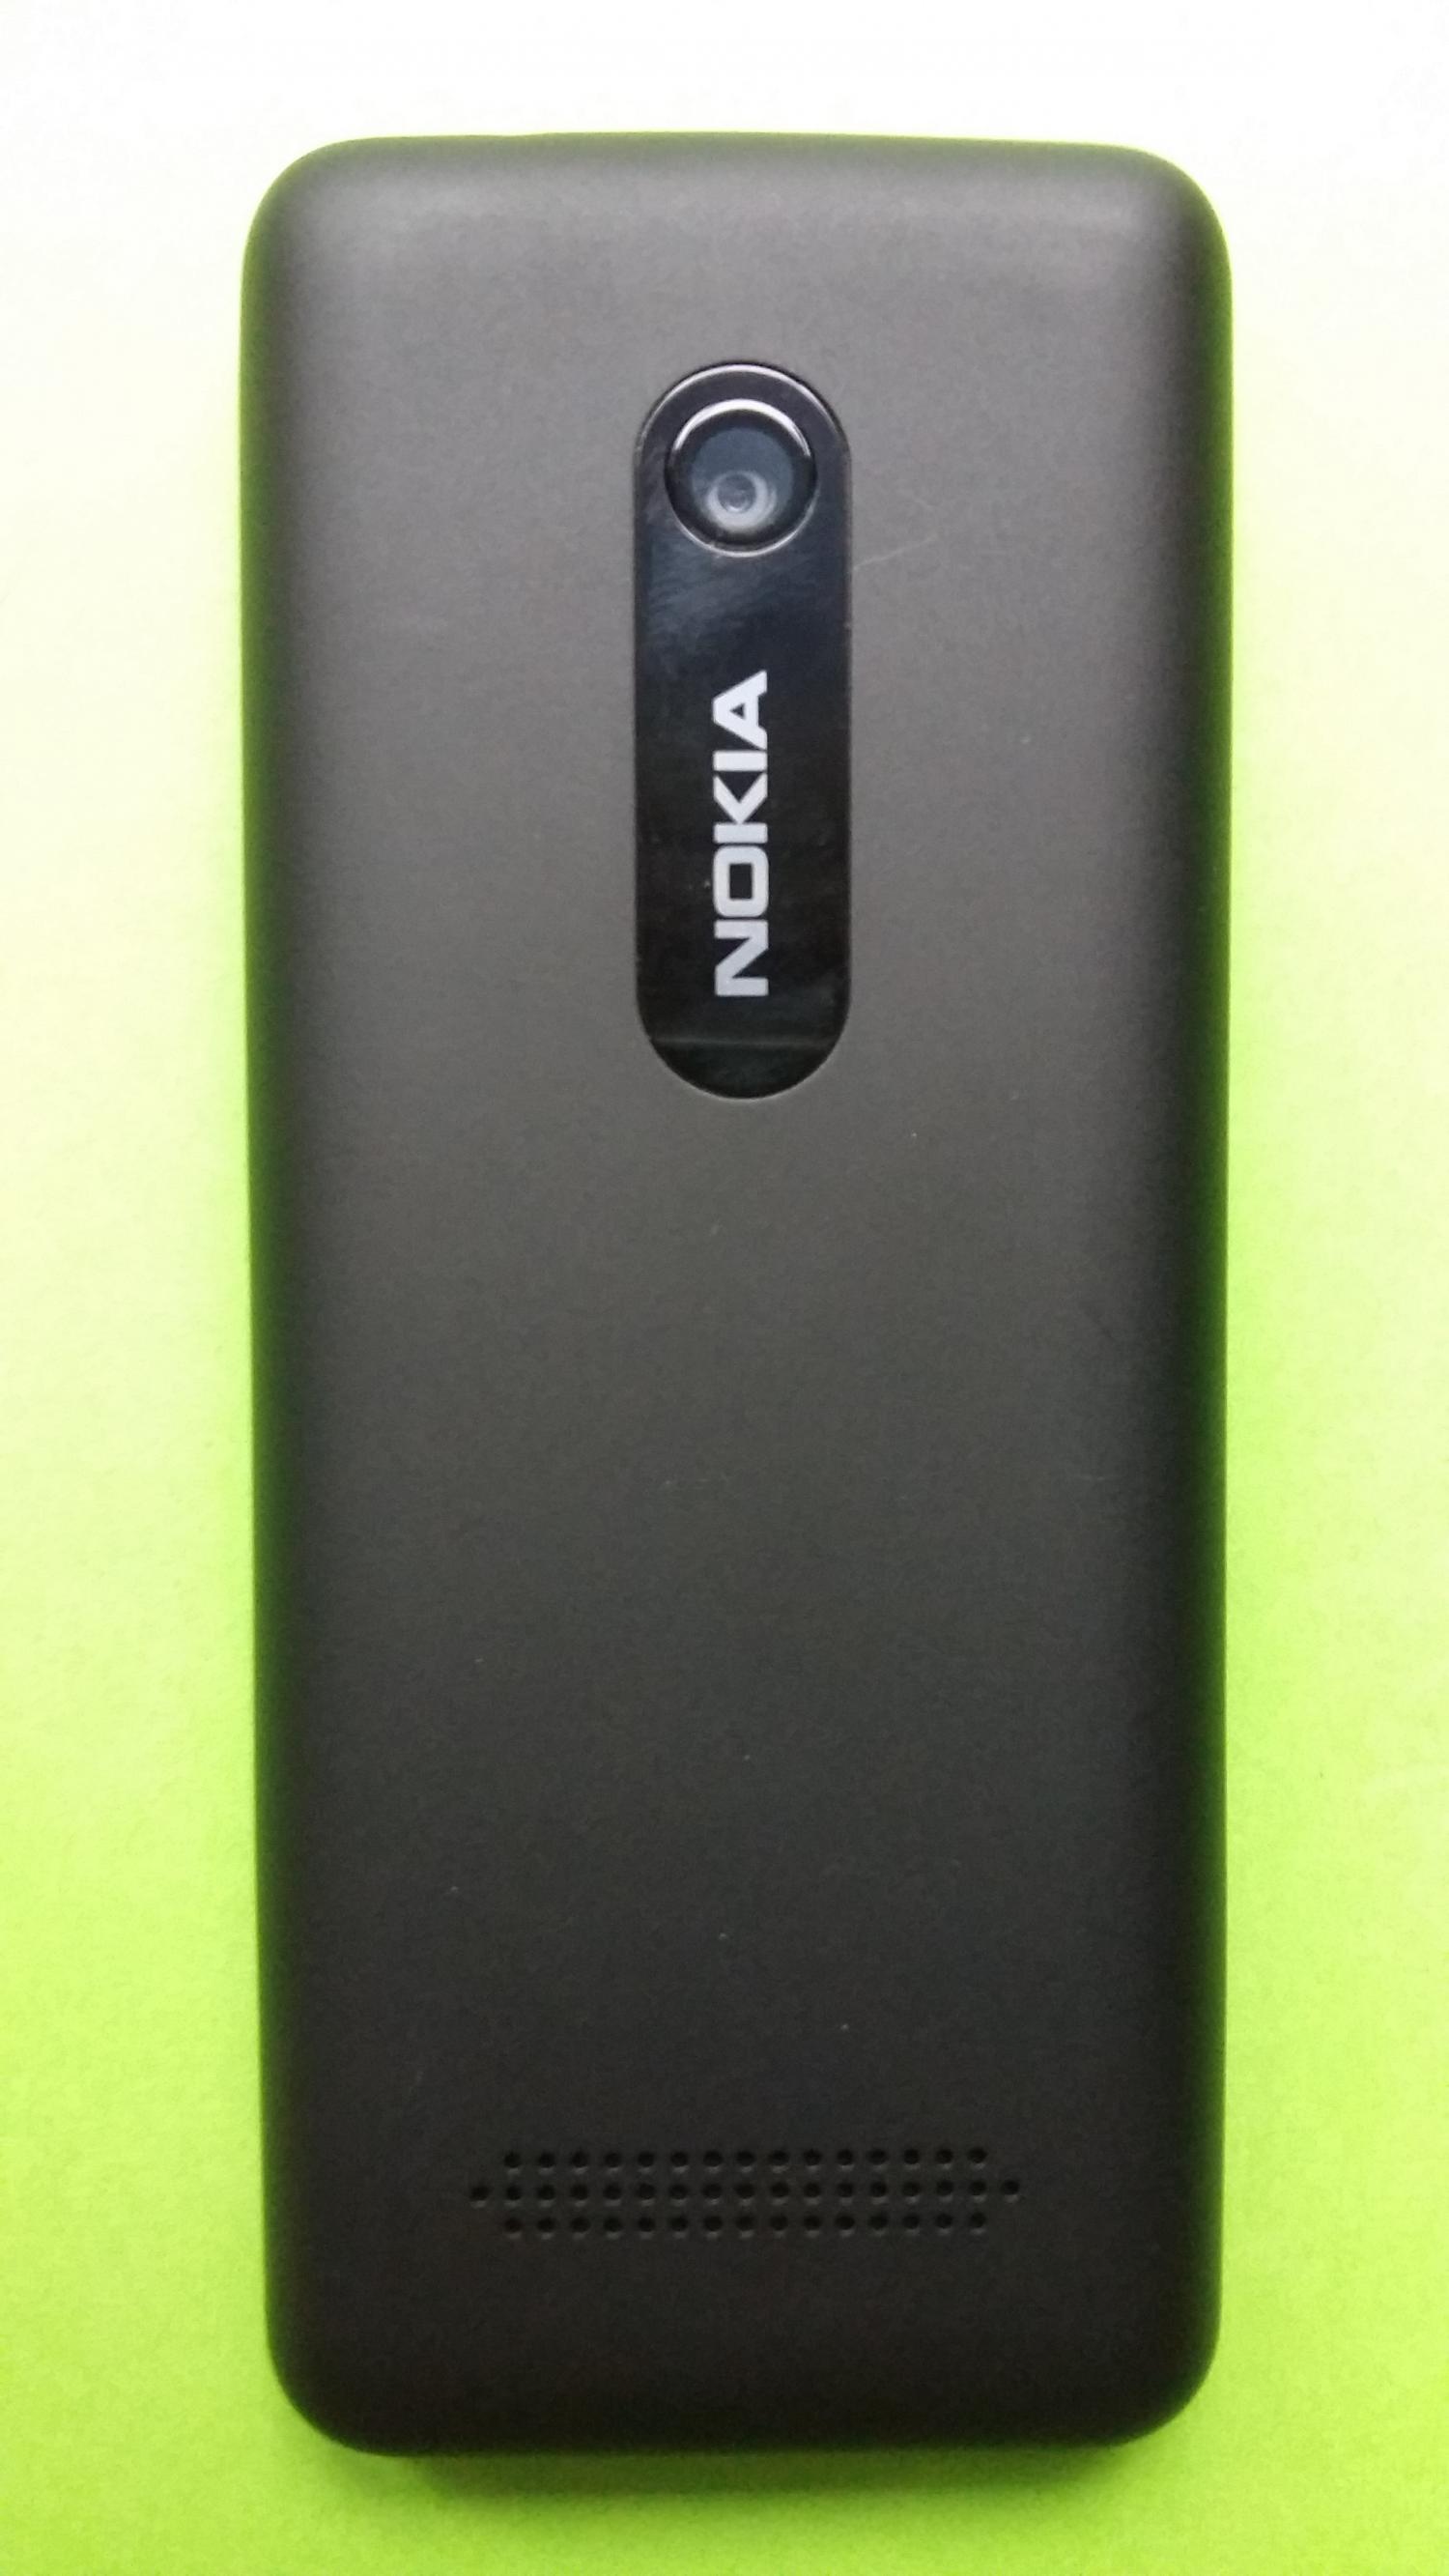 image-7299928-Nokia 206.1 Asha (1)2.jpg